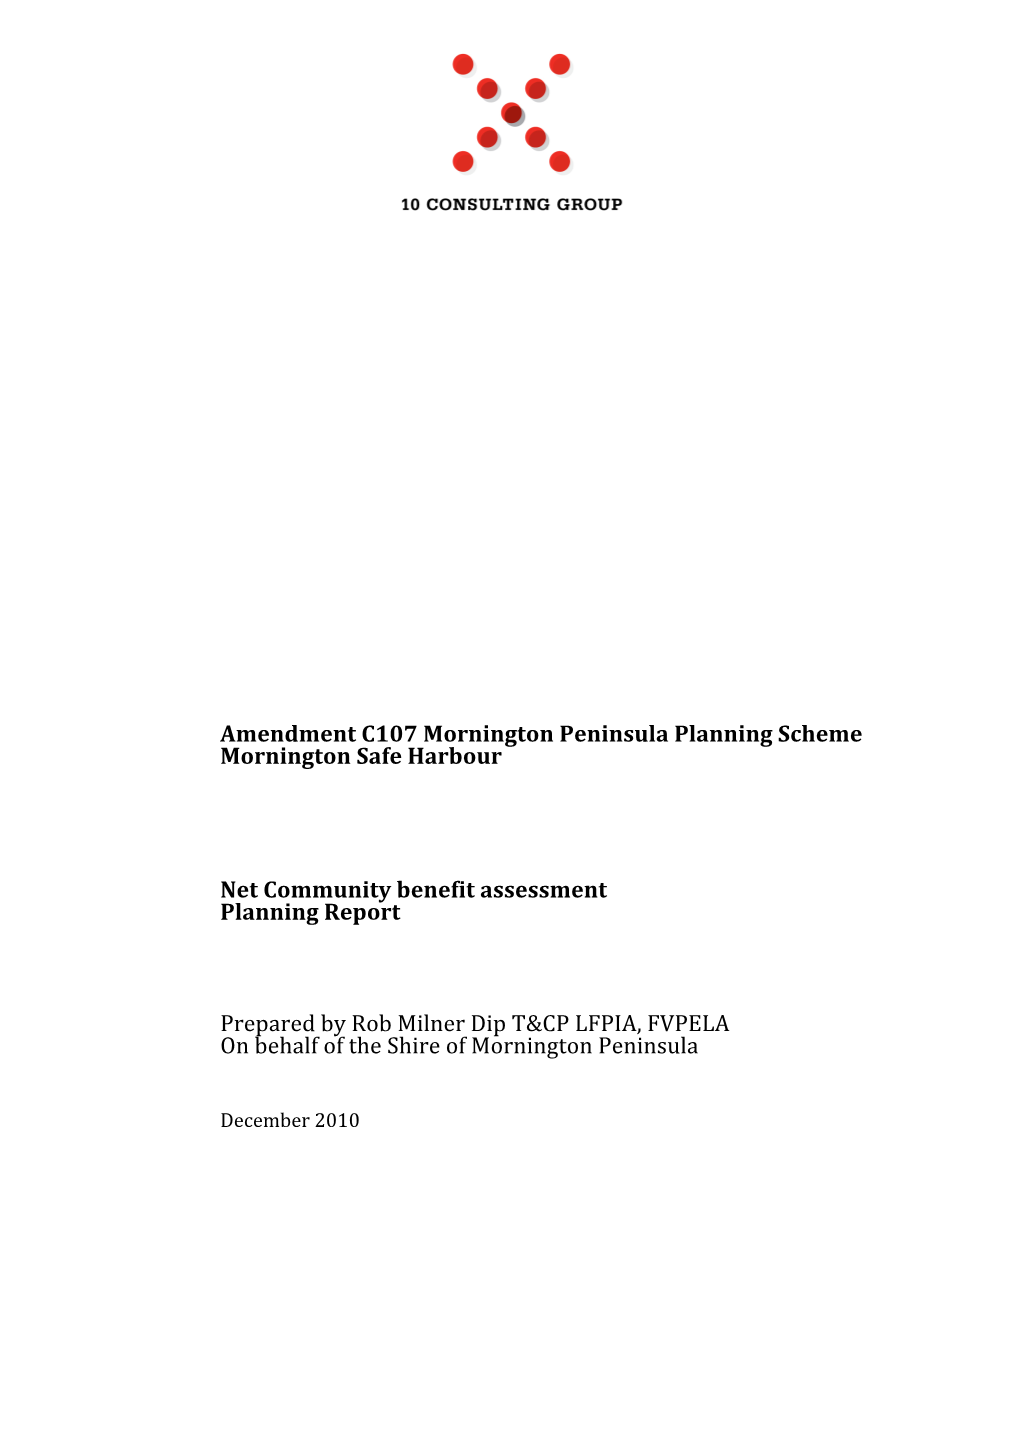 Amendment C107 Mornington Peninsula Planning Scheme Mornington Safe Harbour